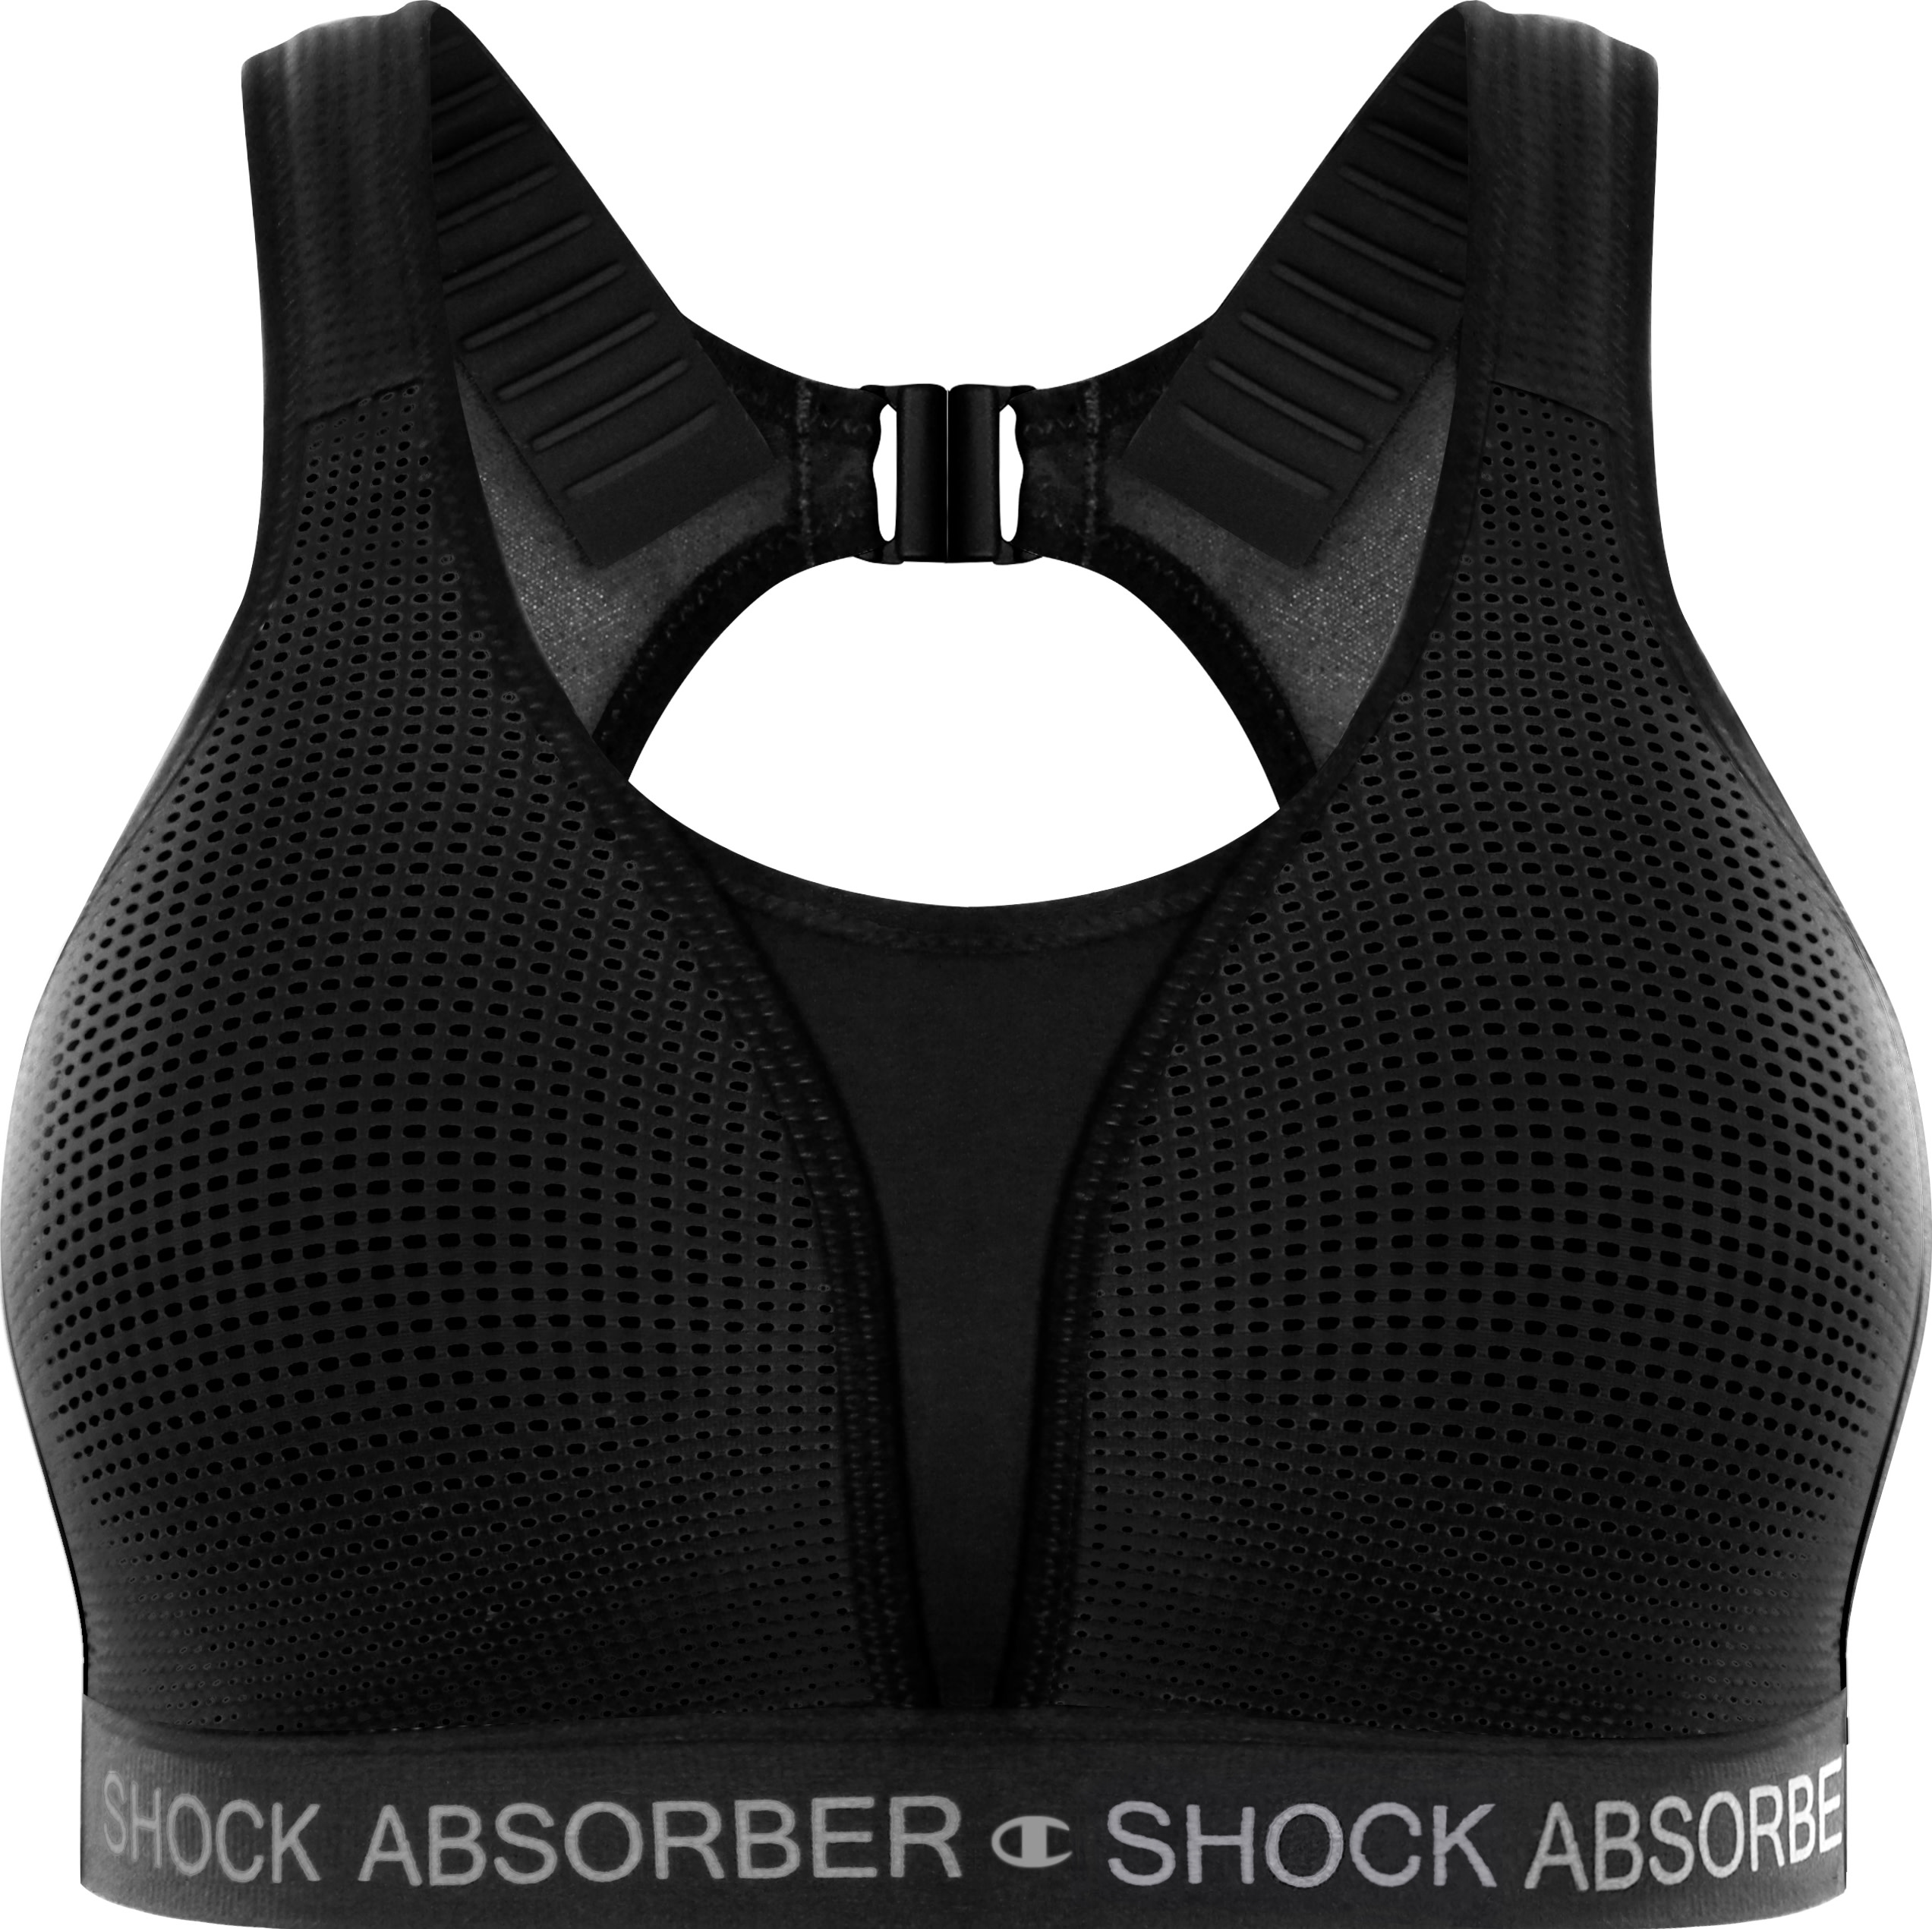 https://www.fjellsport.no/assets/blobs/shock-absorber-women-s-ultimate-run-bra-padded-black-7e3976cfa0.jpeg